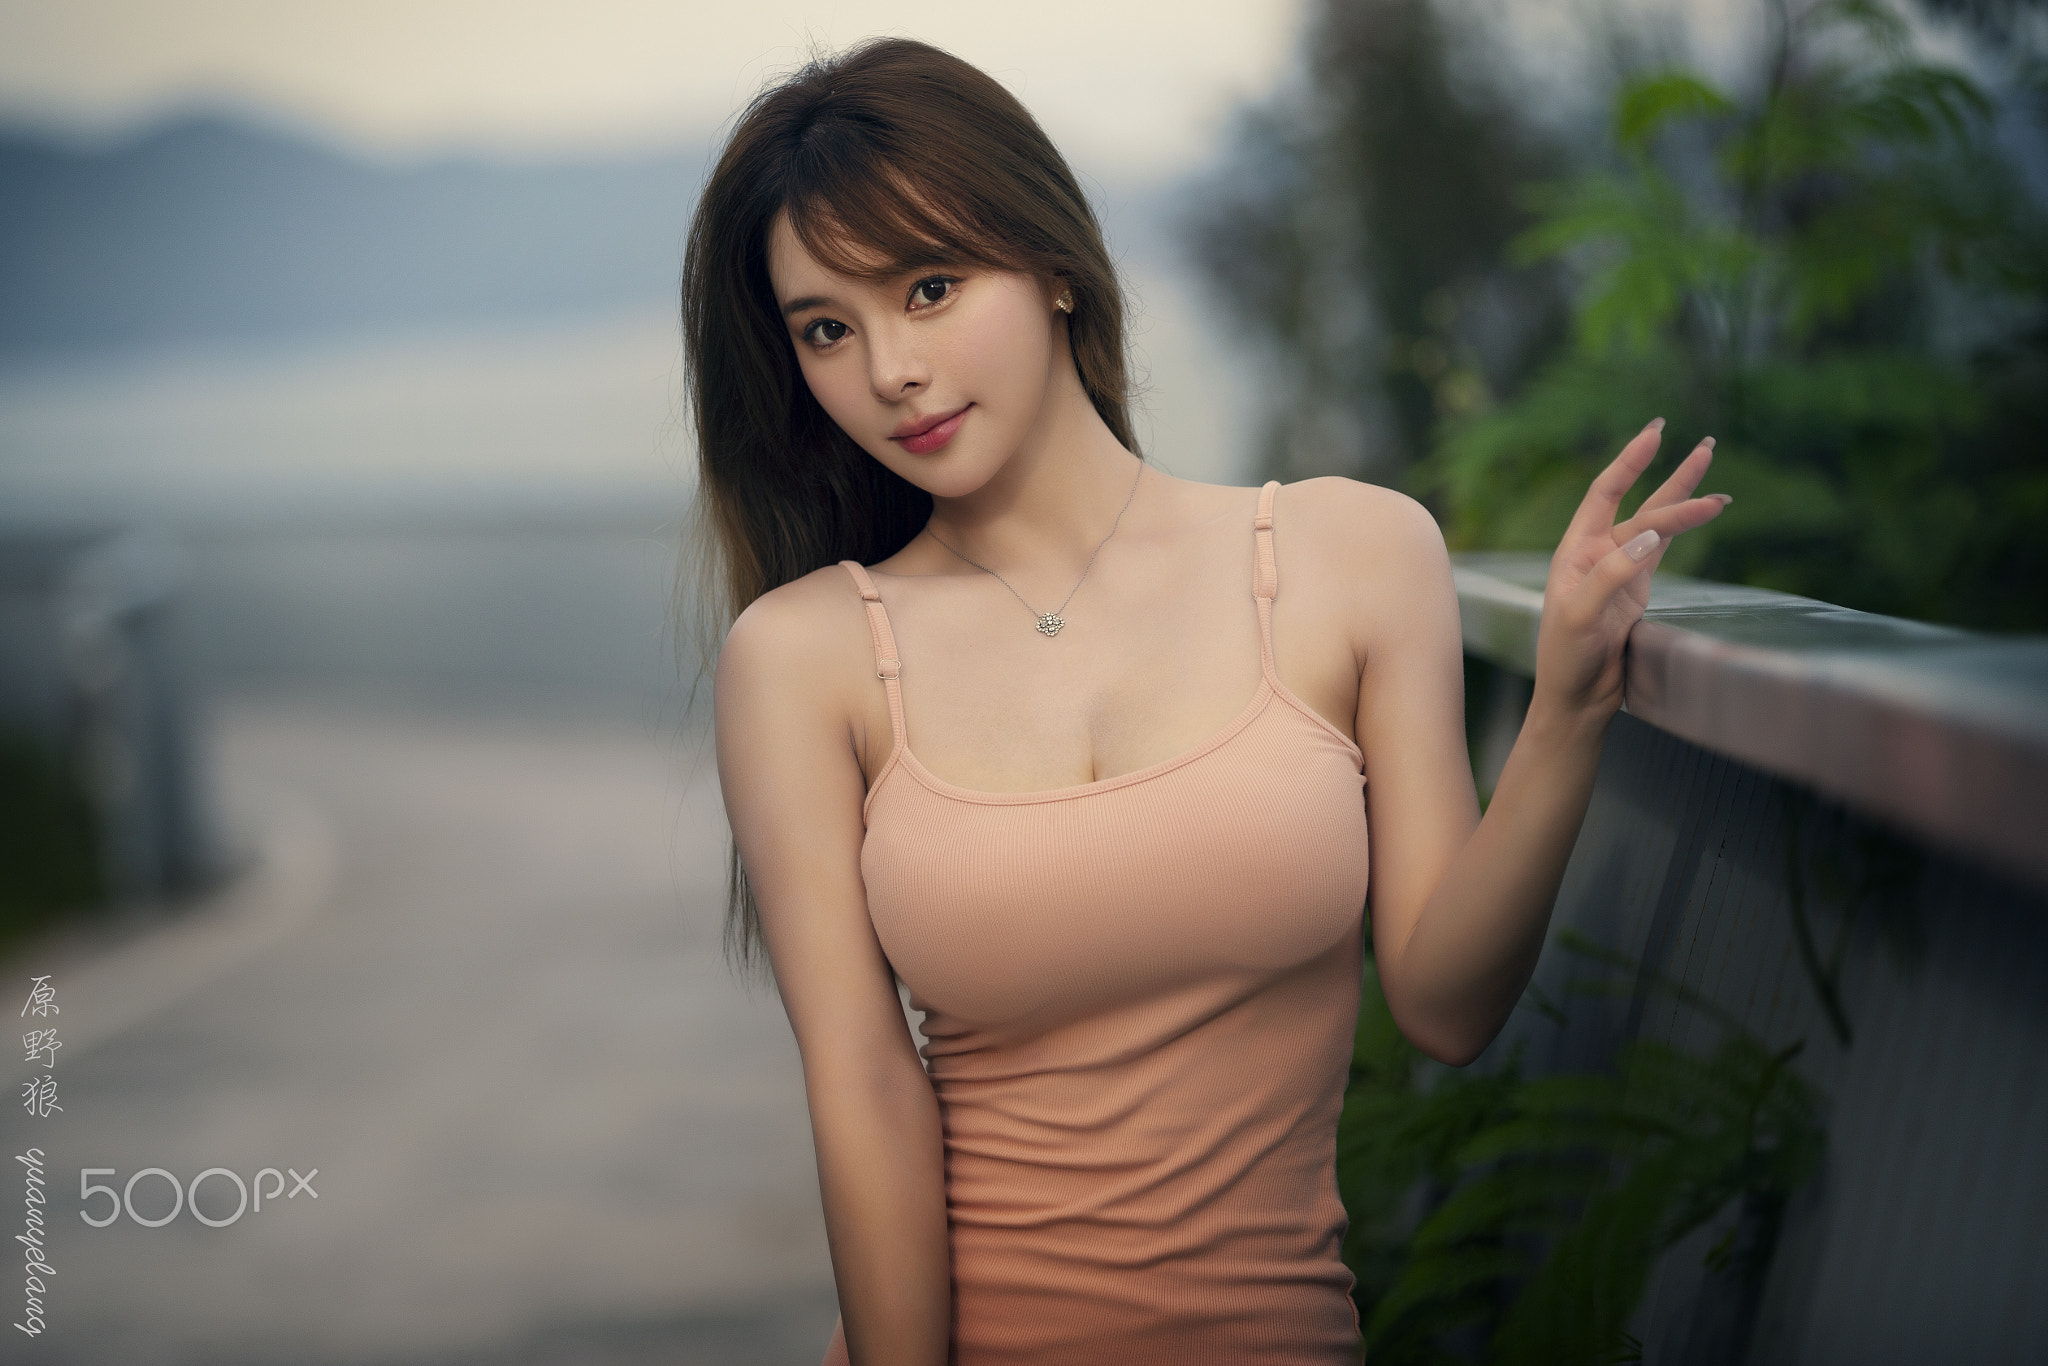 Yuan Yelang Women Asian Long Hair Looking At Viewer Makeup Pink Clothing Necklace Plants Depth Of Fi 2048x1366